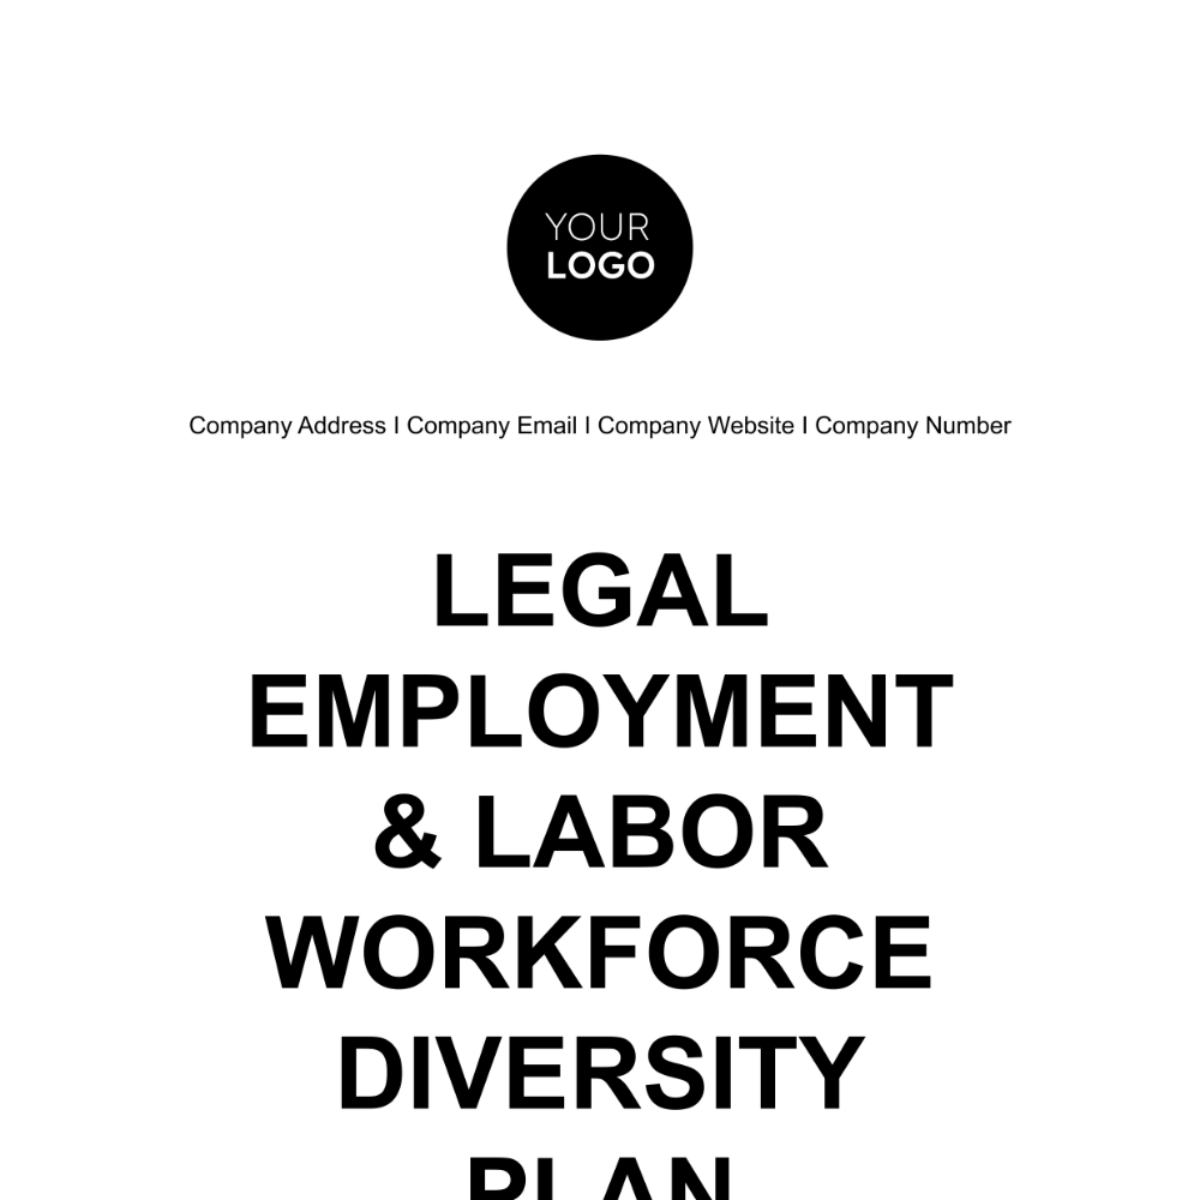 Free Legal Employment & Labor Workforce Diversity Plan Template